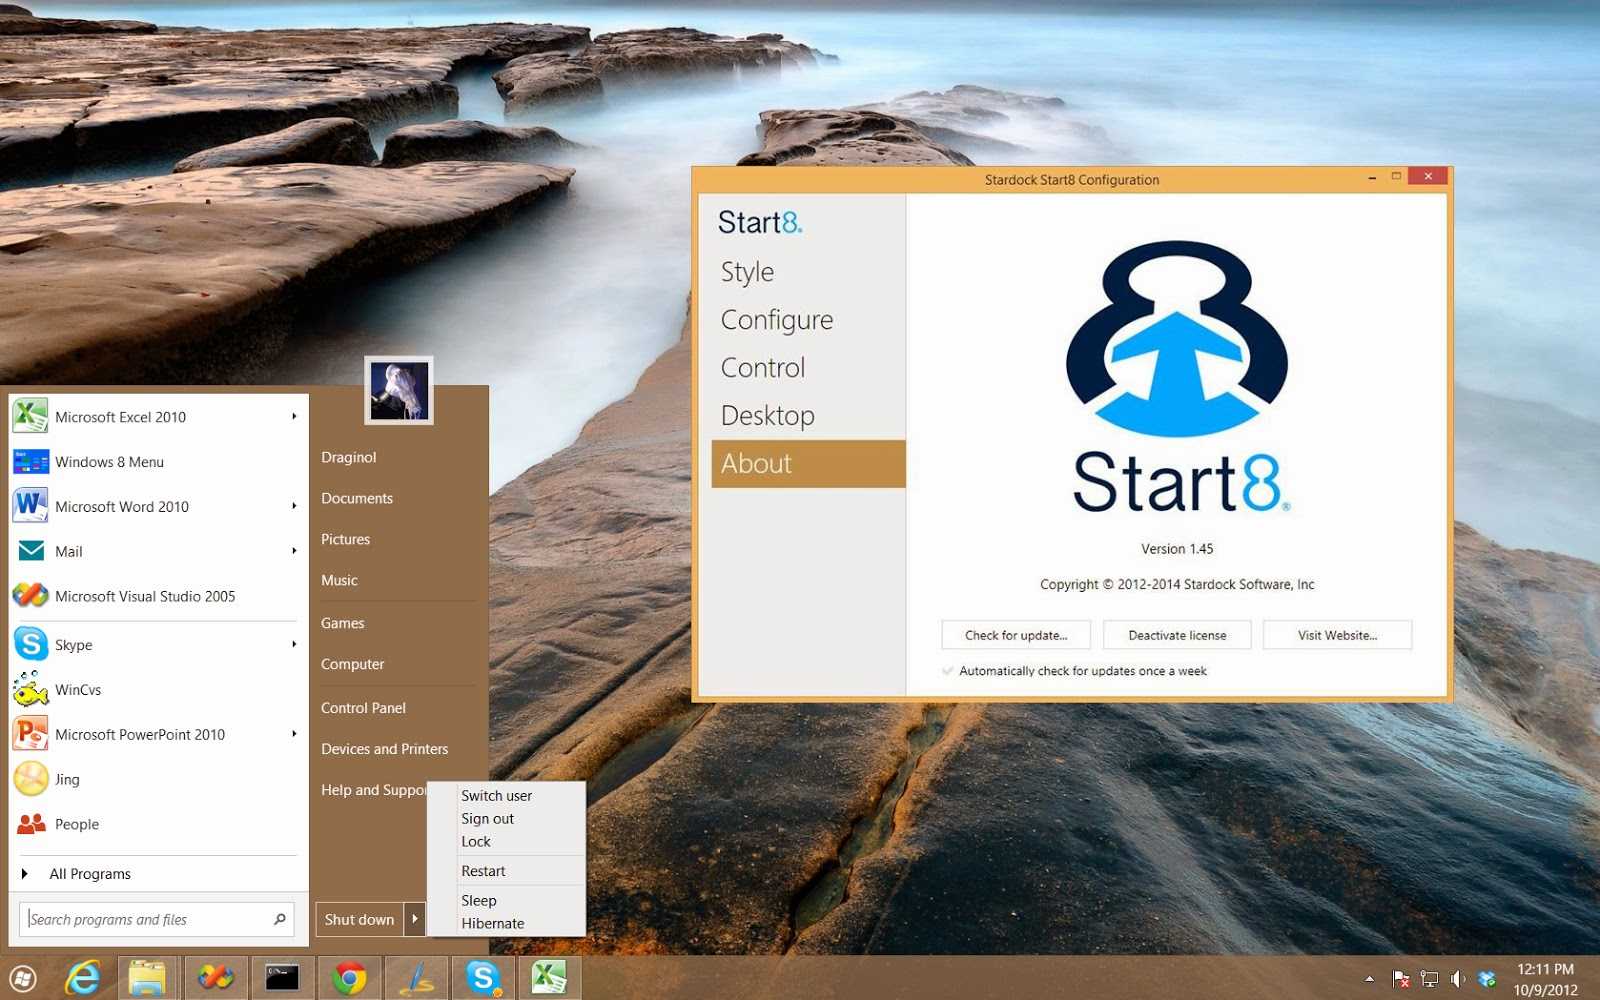 Stardock software catalog: windows customization apps and utilities